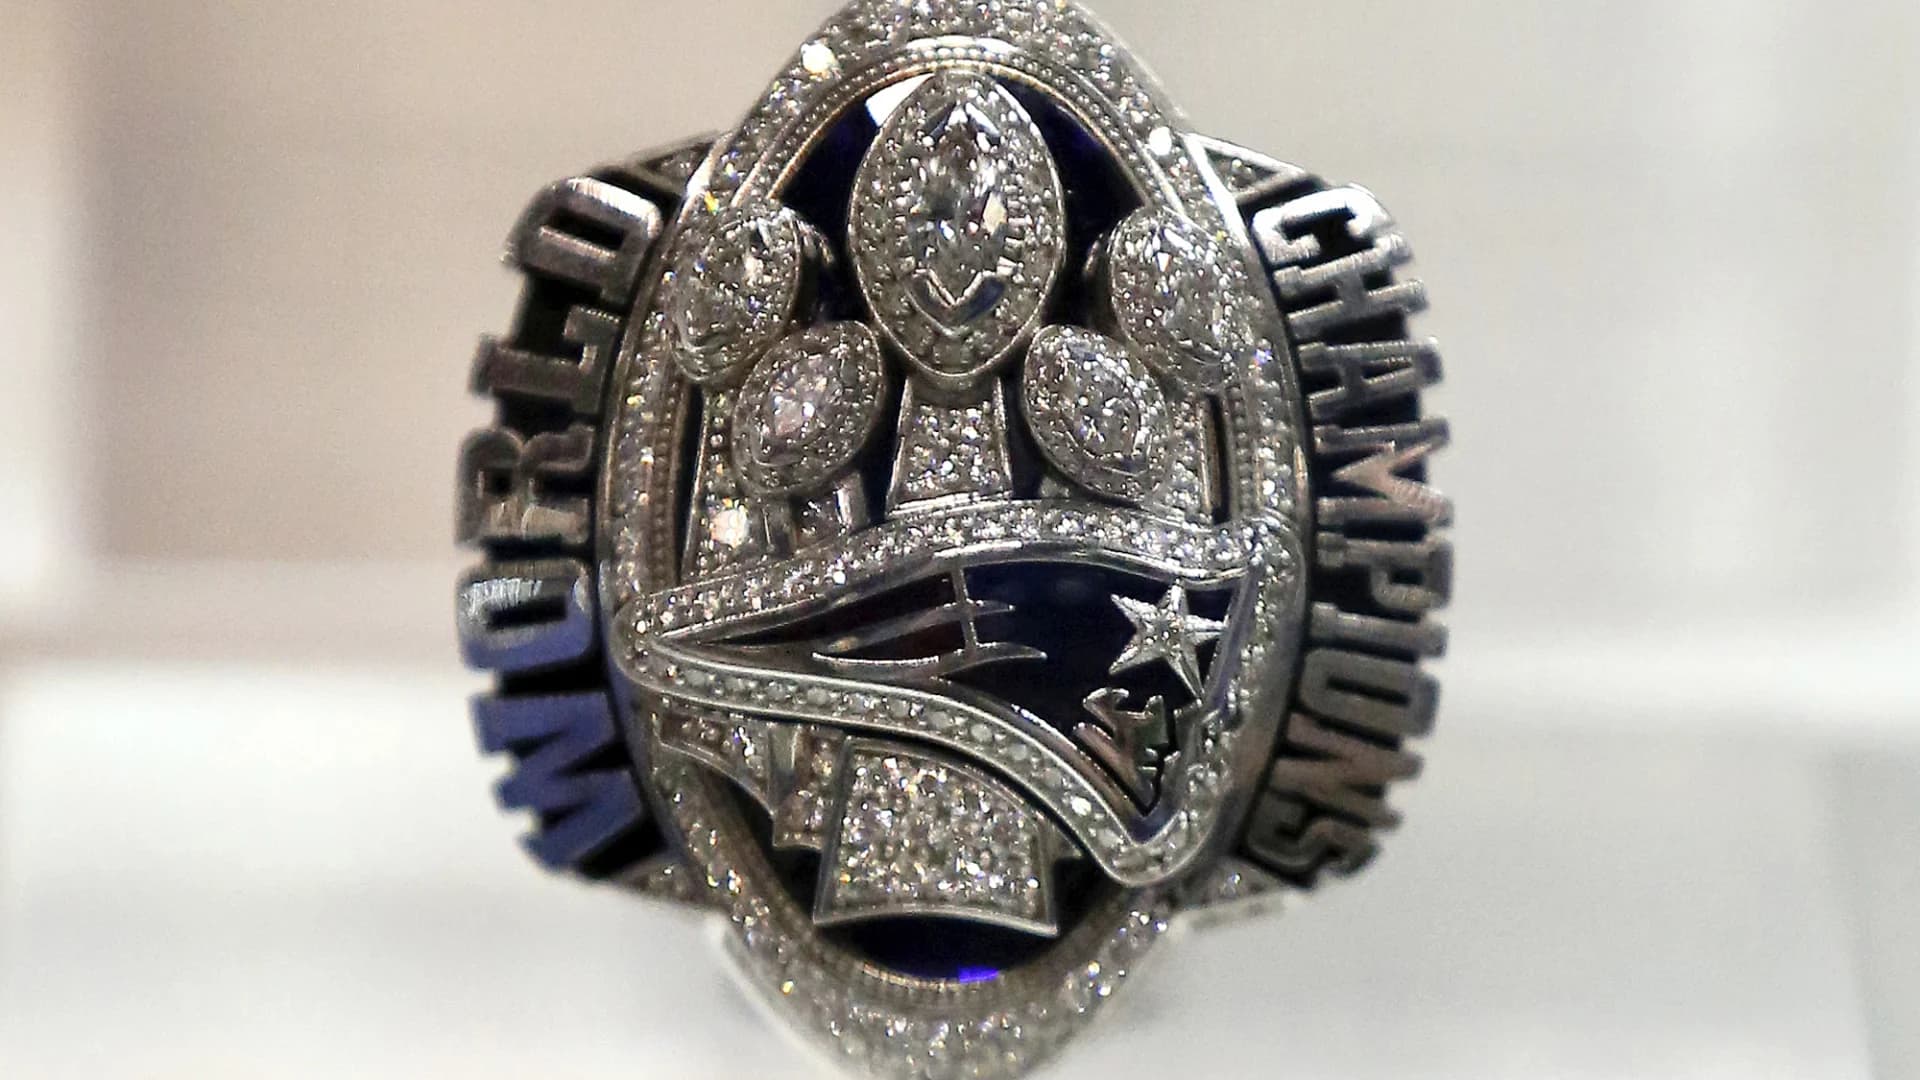 DOJ: Roseland man bilked former Patriots player; fraudulently sold Brady championship rings 